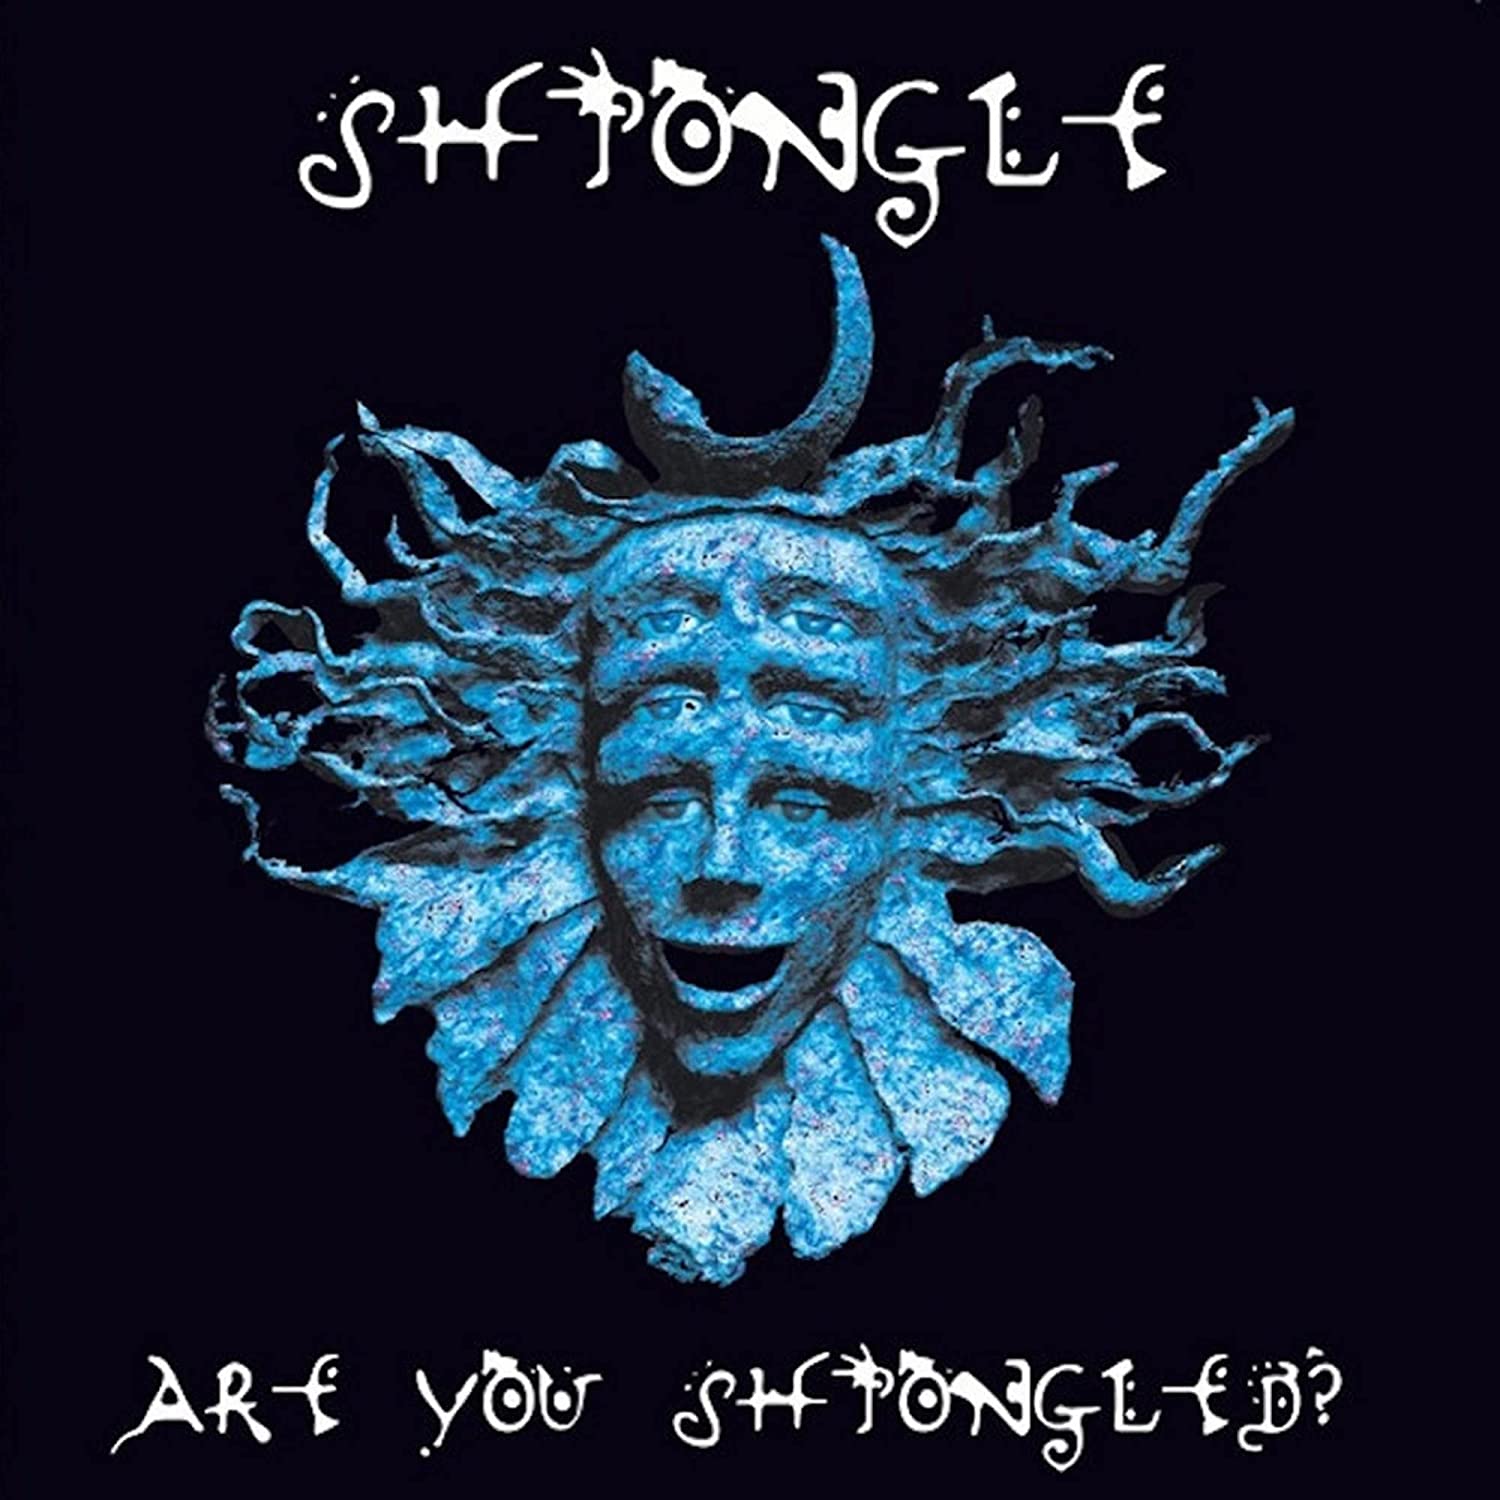 Shpongle - Are You Shpongled? 3LP